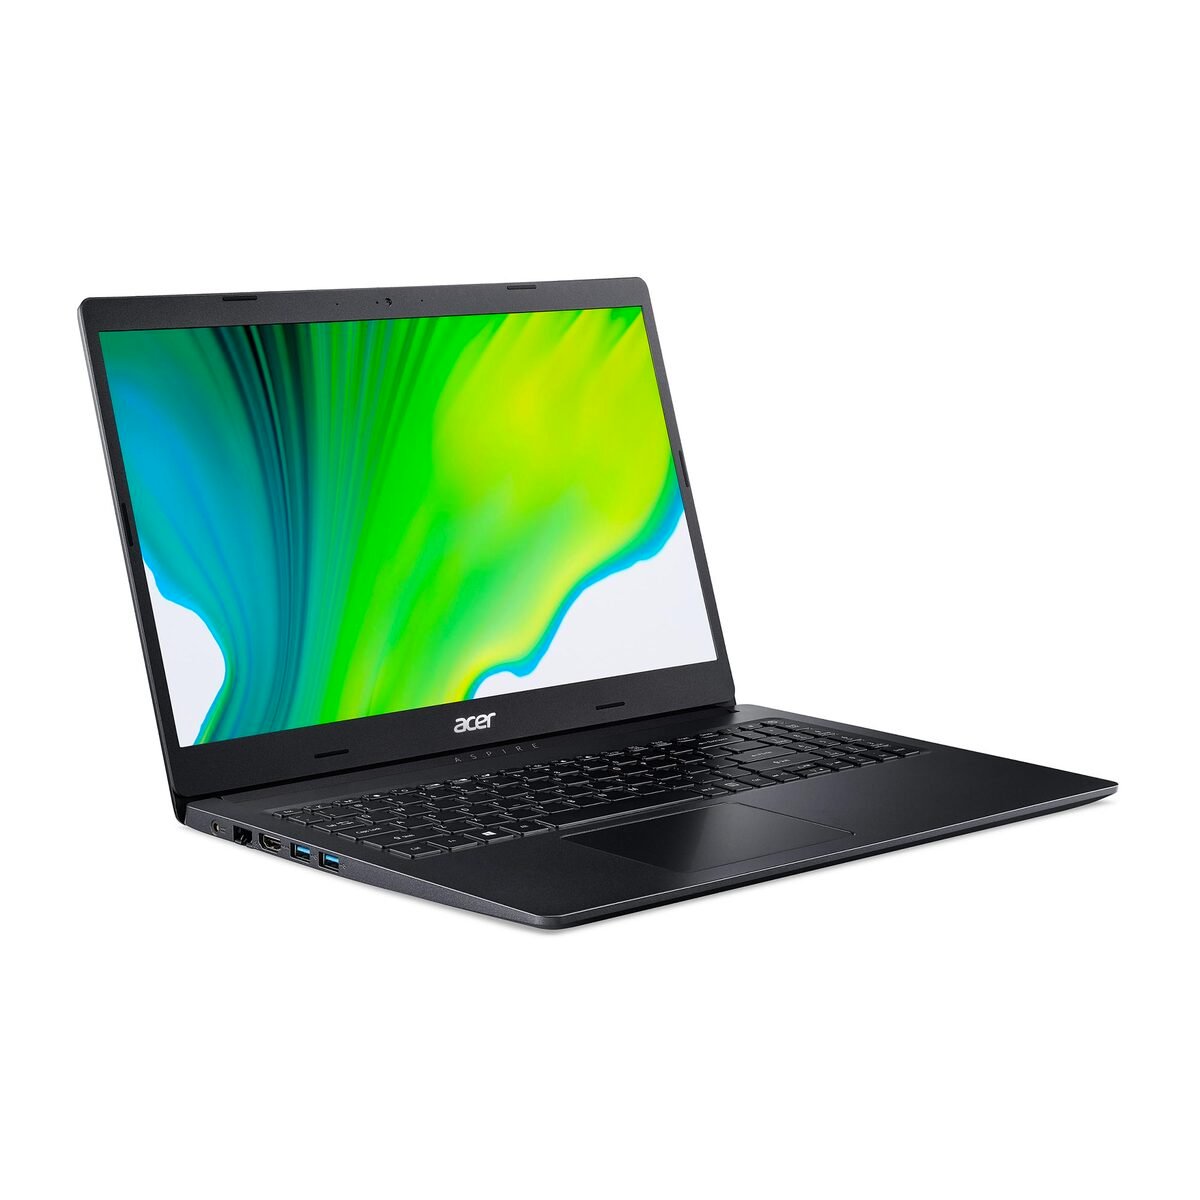 Acer Notebook A315 NX.HNSEM.007, Intel Core i5-10210U,8GB RAM, 1TB HDD+128GB SSD, 2GB Nvidia GeForce MX230, 15.6"FHD LED Display, Windows 10, Black